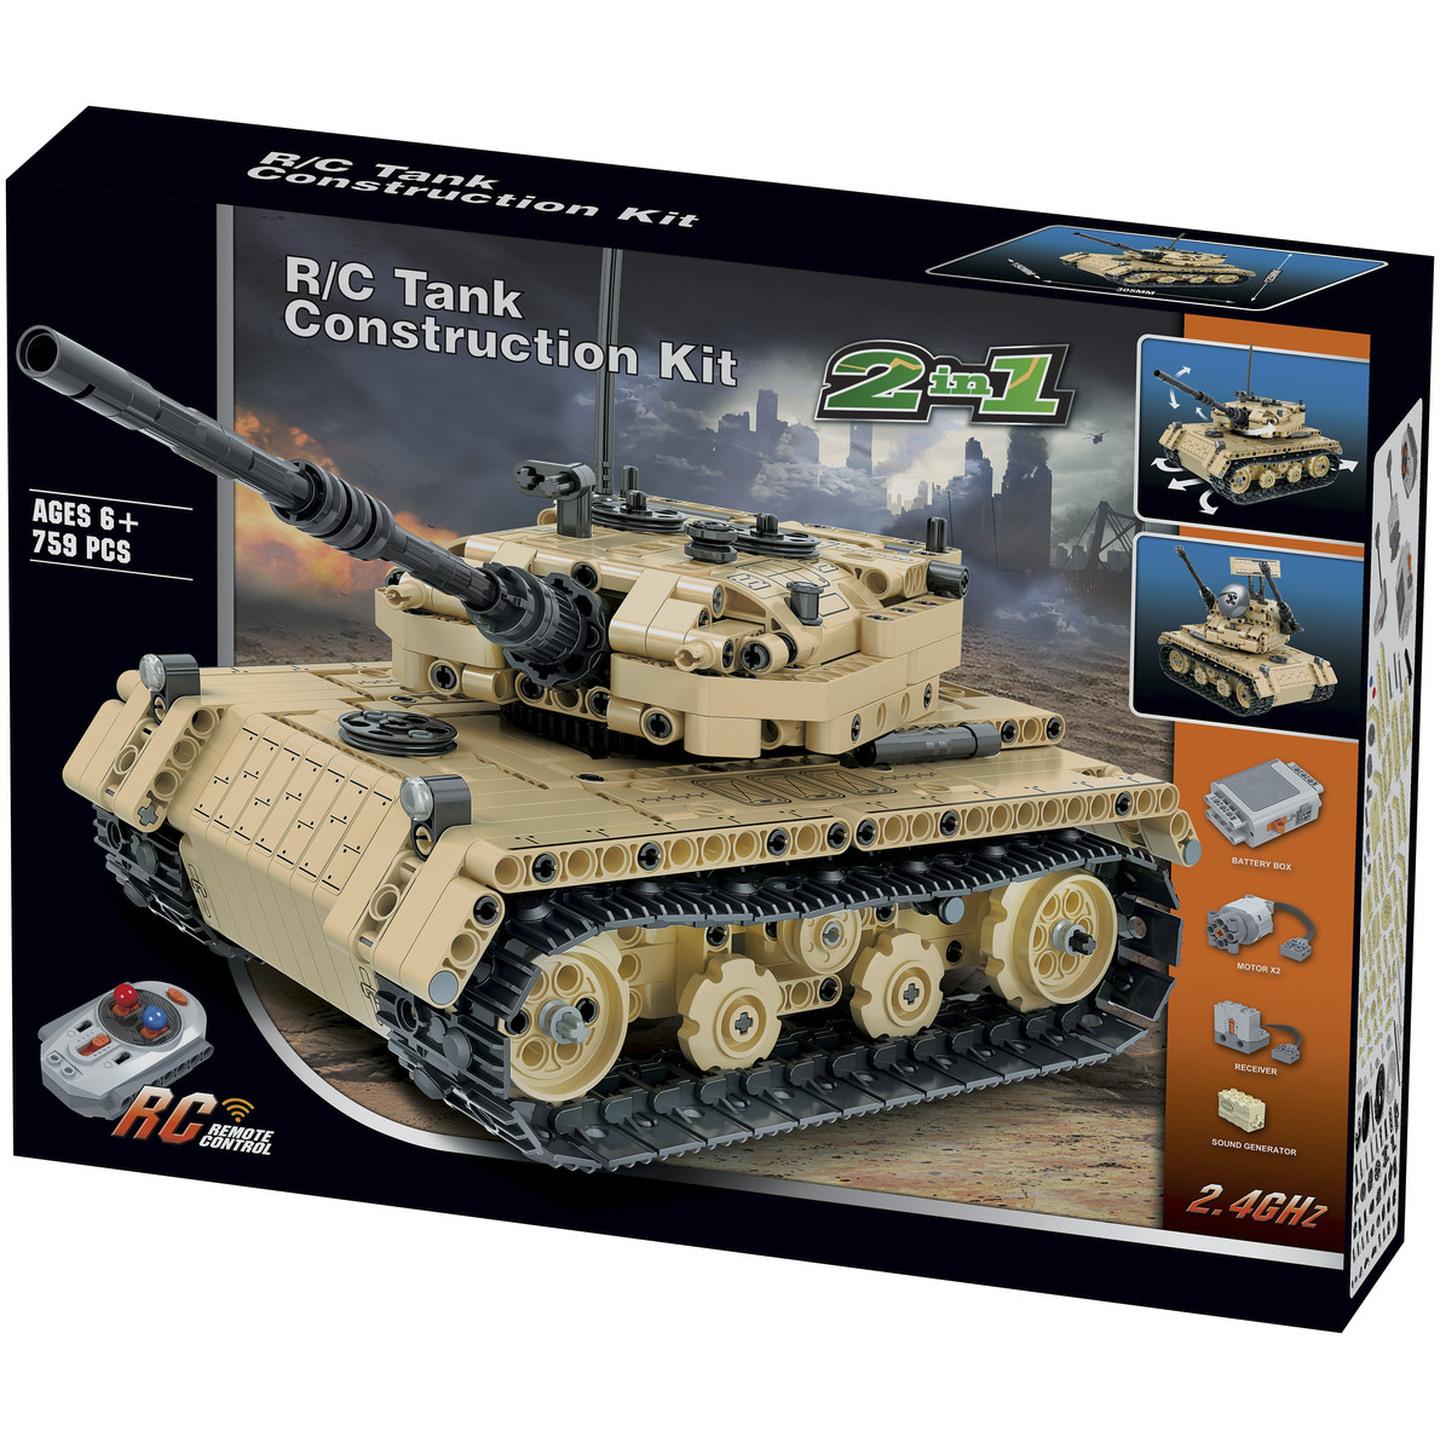 R/C Tank Construction Kit